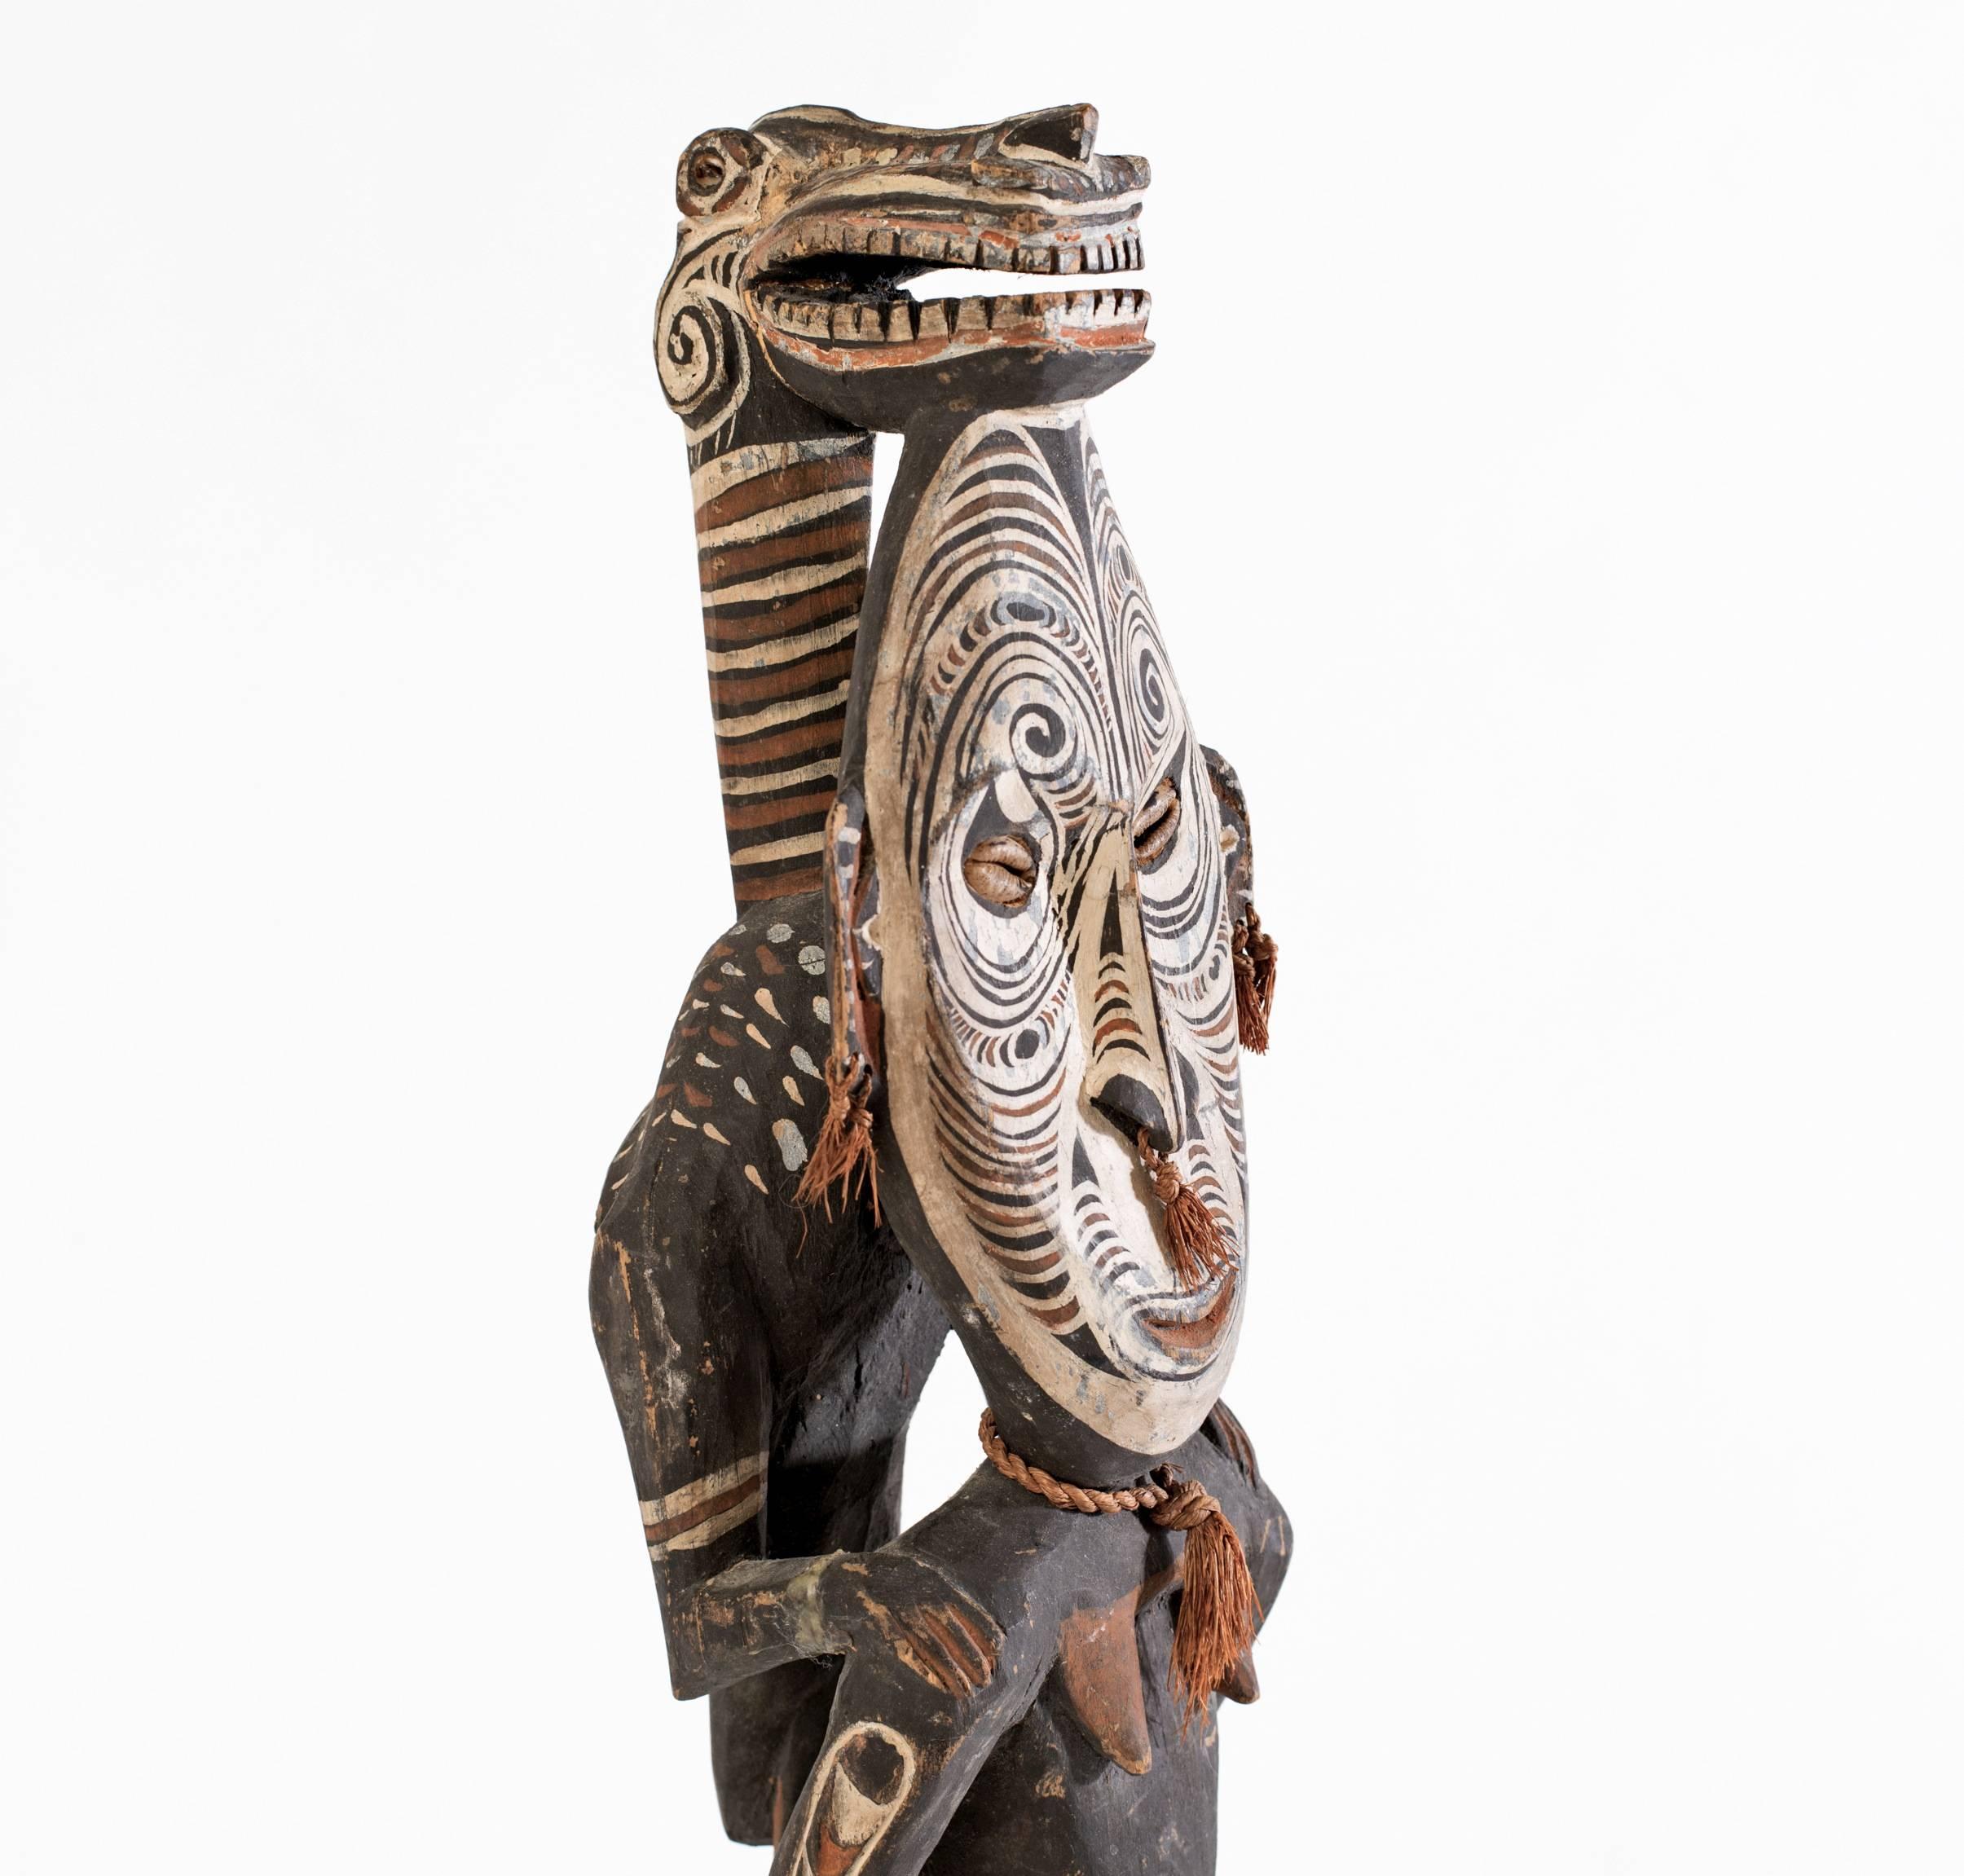 Oceanic Sepik River Gable Figure Sculpture from Papua, New Guinea 1